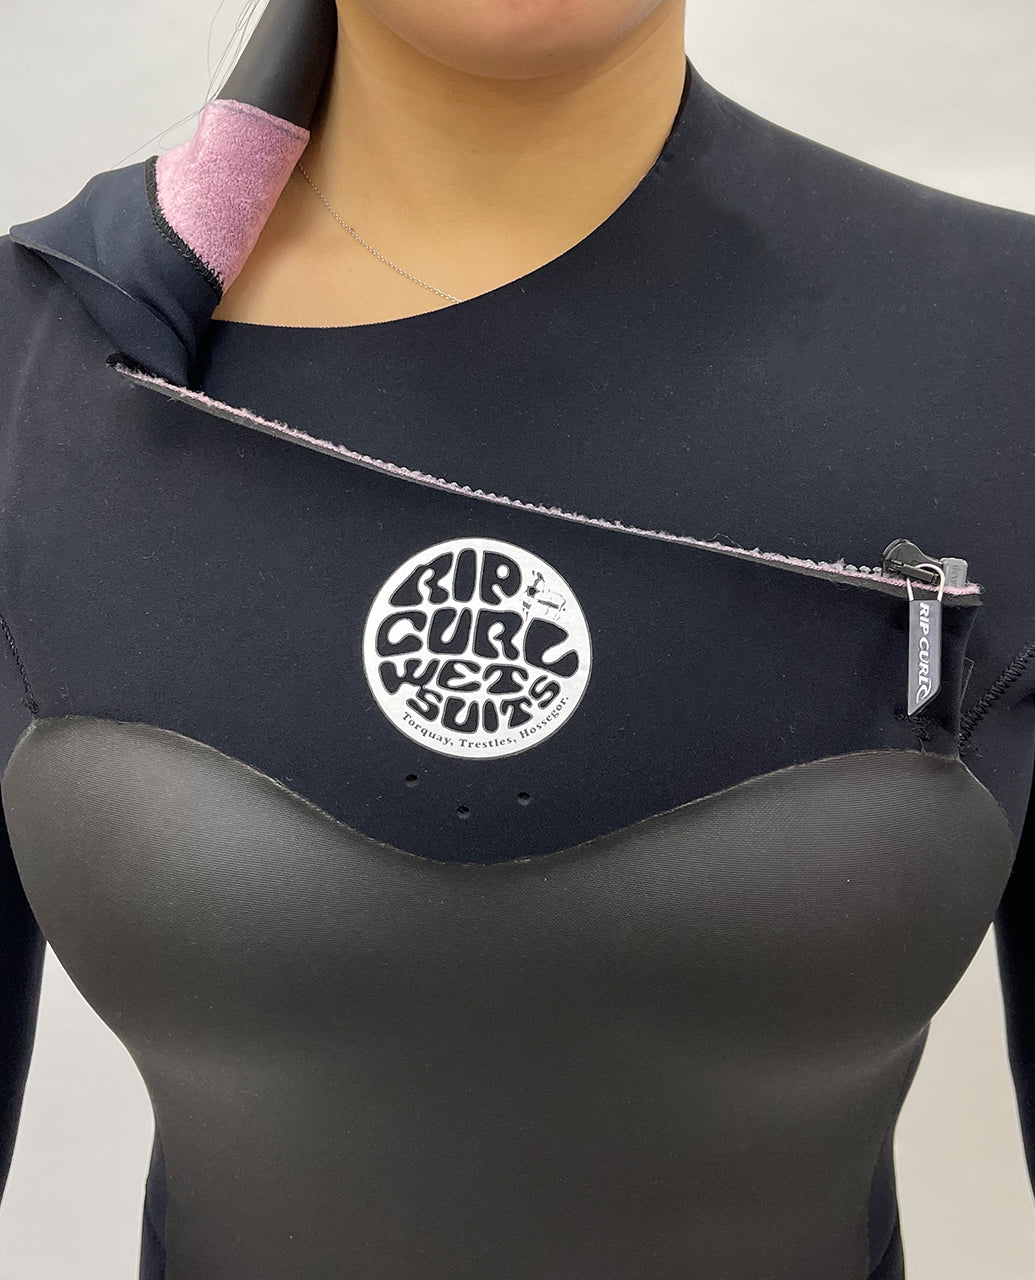 [SALE] [Spring/Autumn/Winter] Women's F BOMB HEATSEEKER E7 3/3mm Chest Zip Full Suit Wetsuit Made In Japan